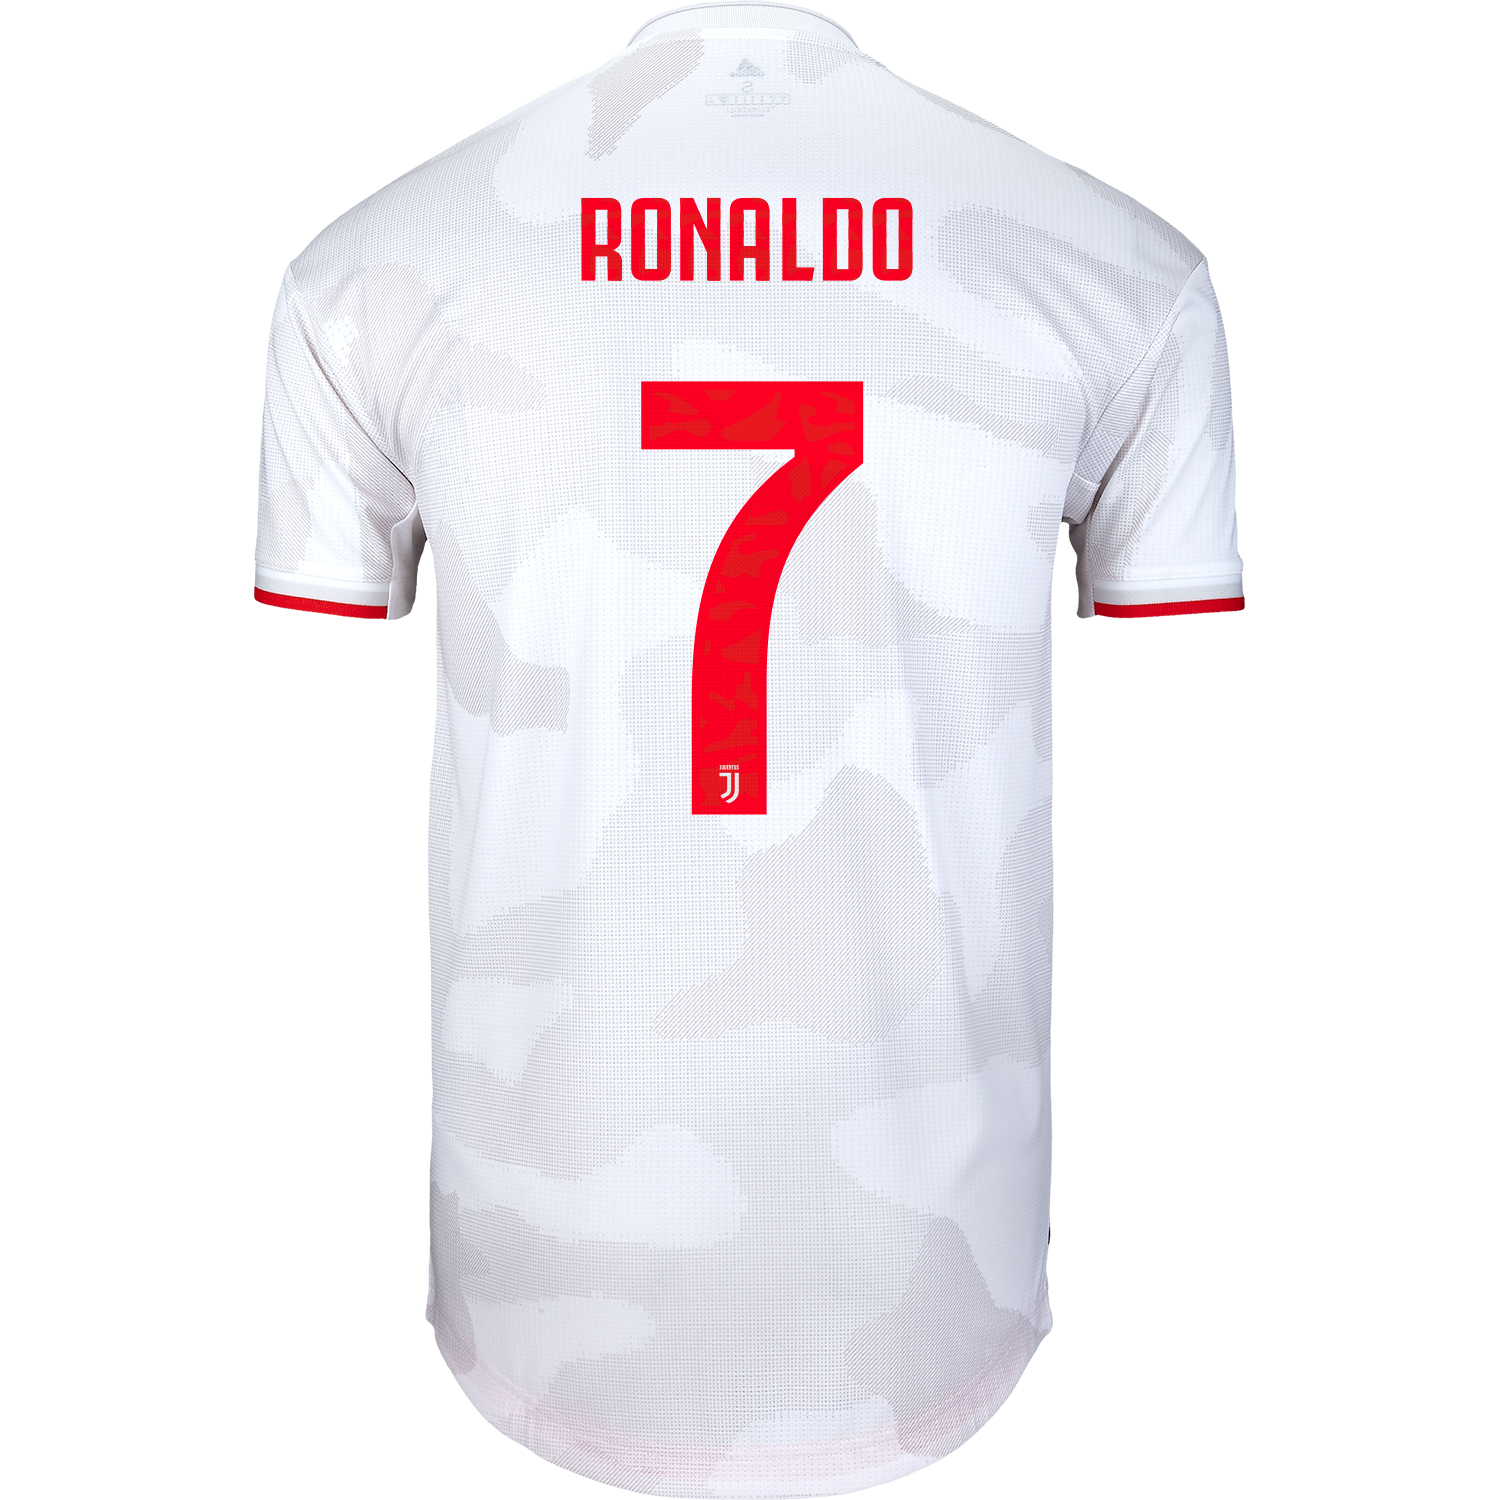 ronaldo juventus authentic jersey